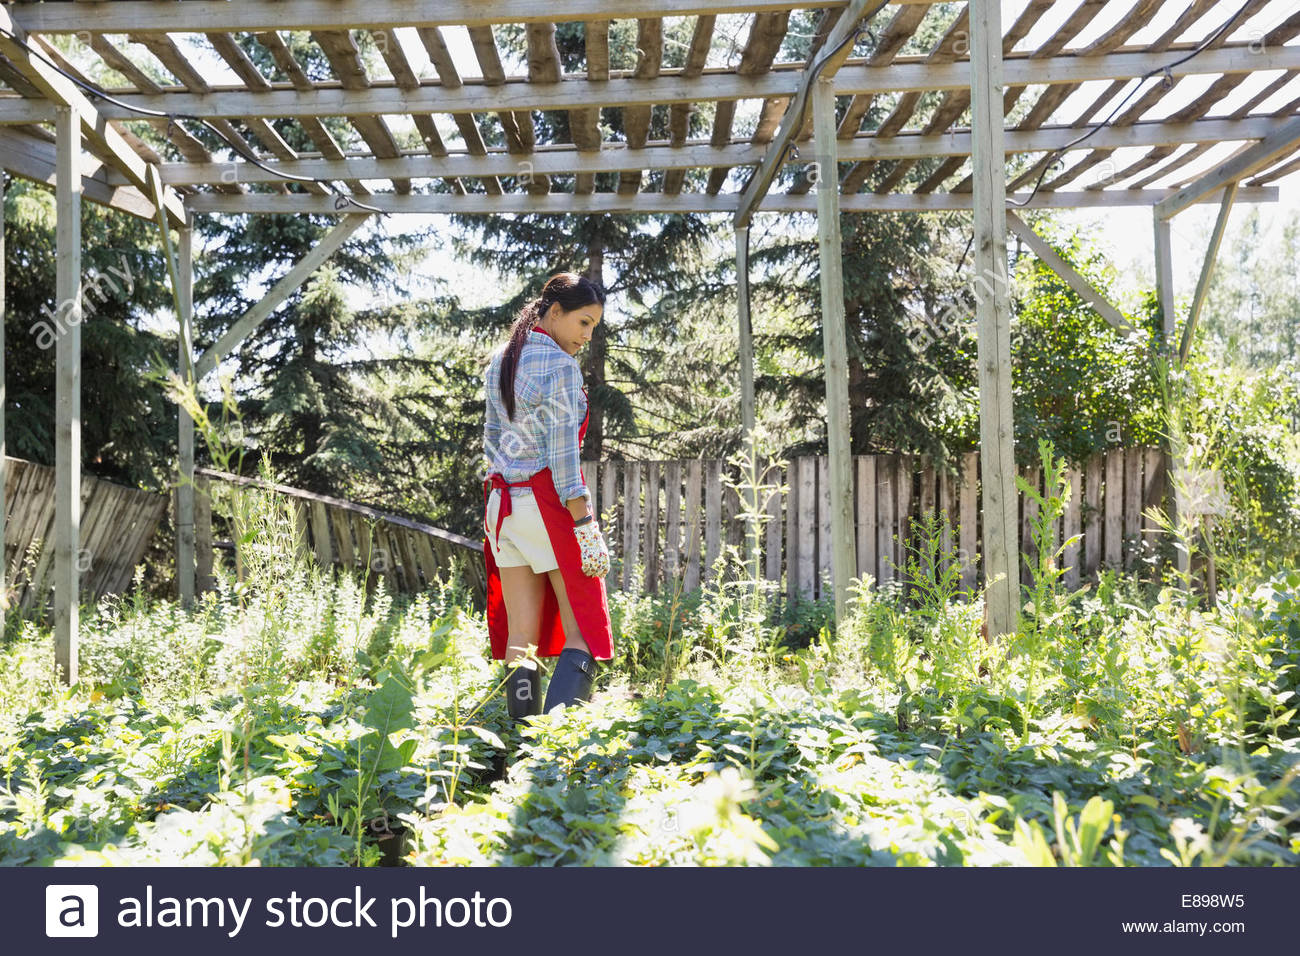 Worker examining plants in plant nursery Stock Photo